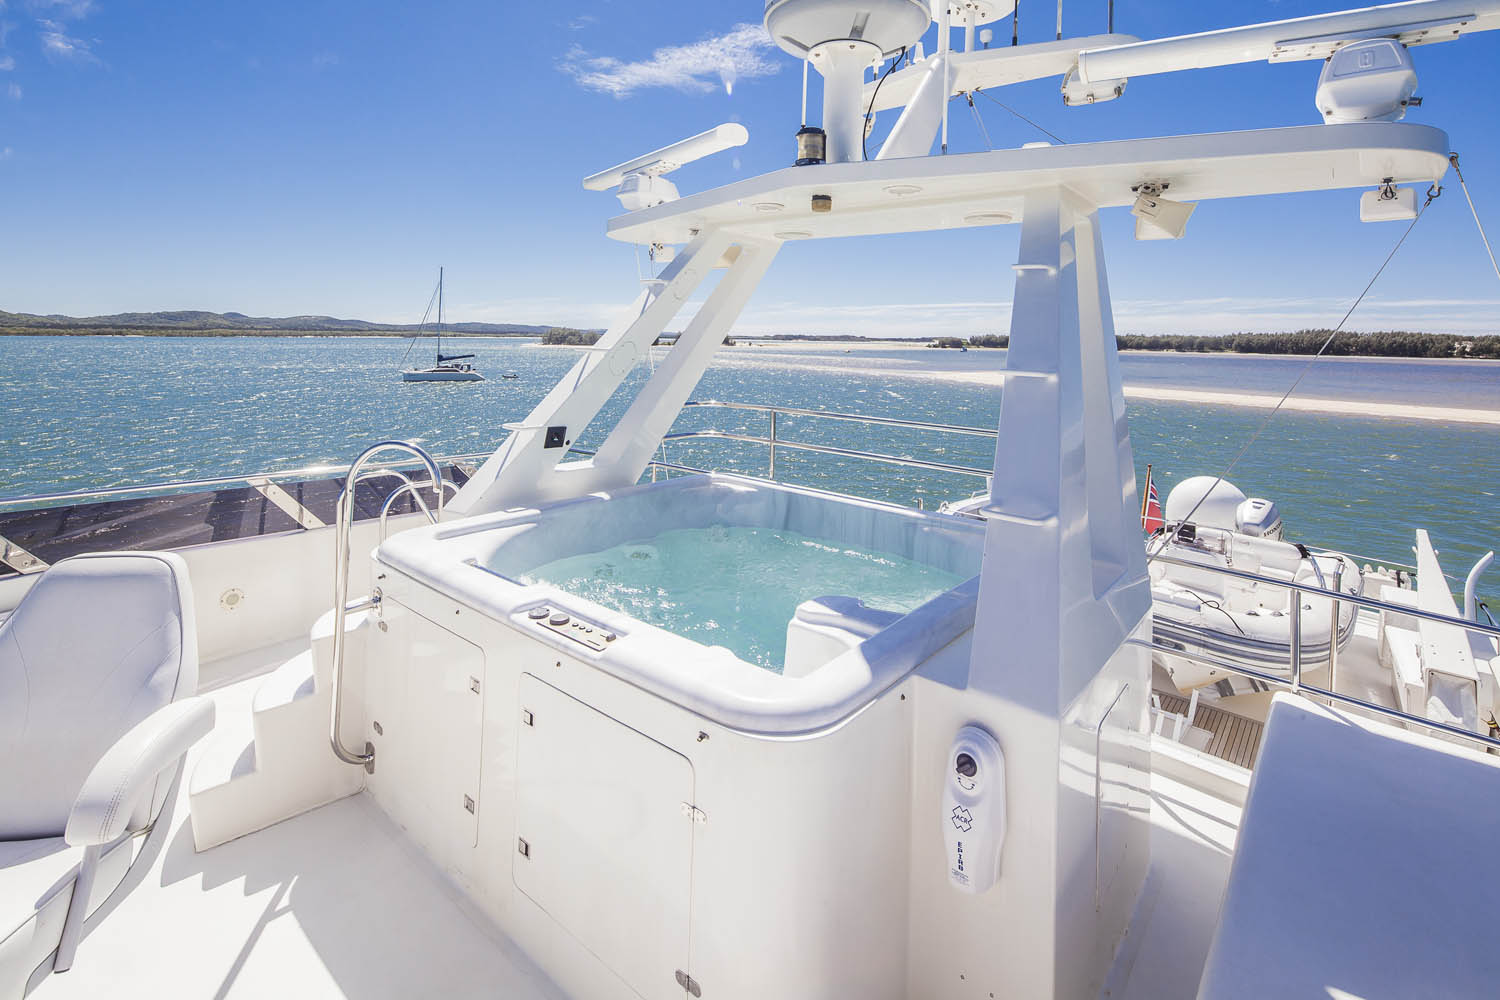 M/Y Silent World II yacht for sale hot tub on deck